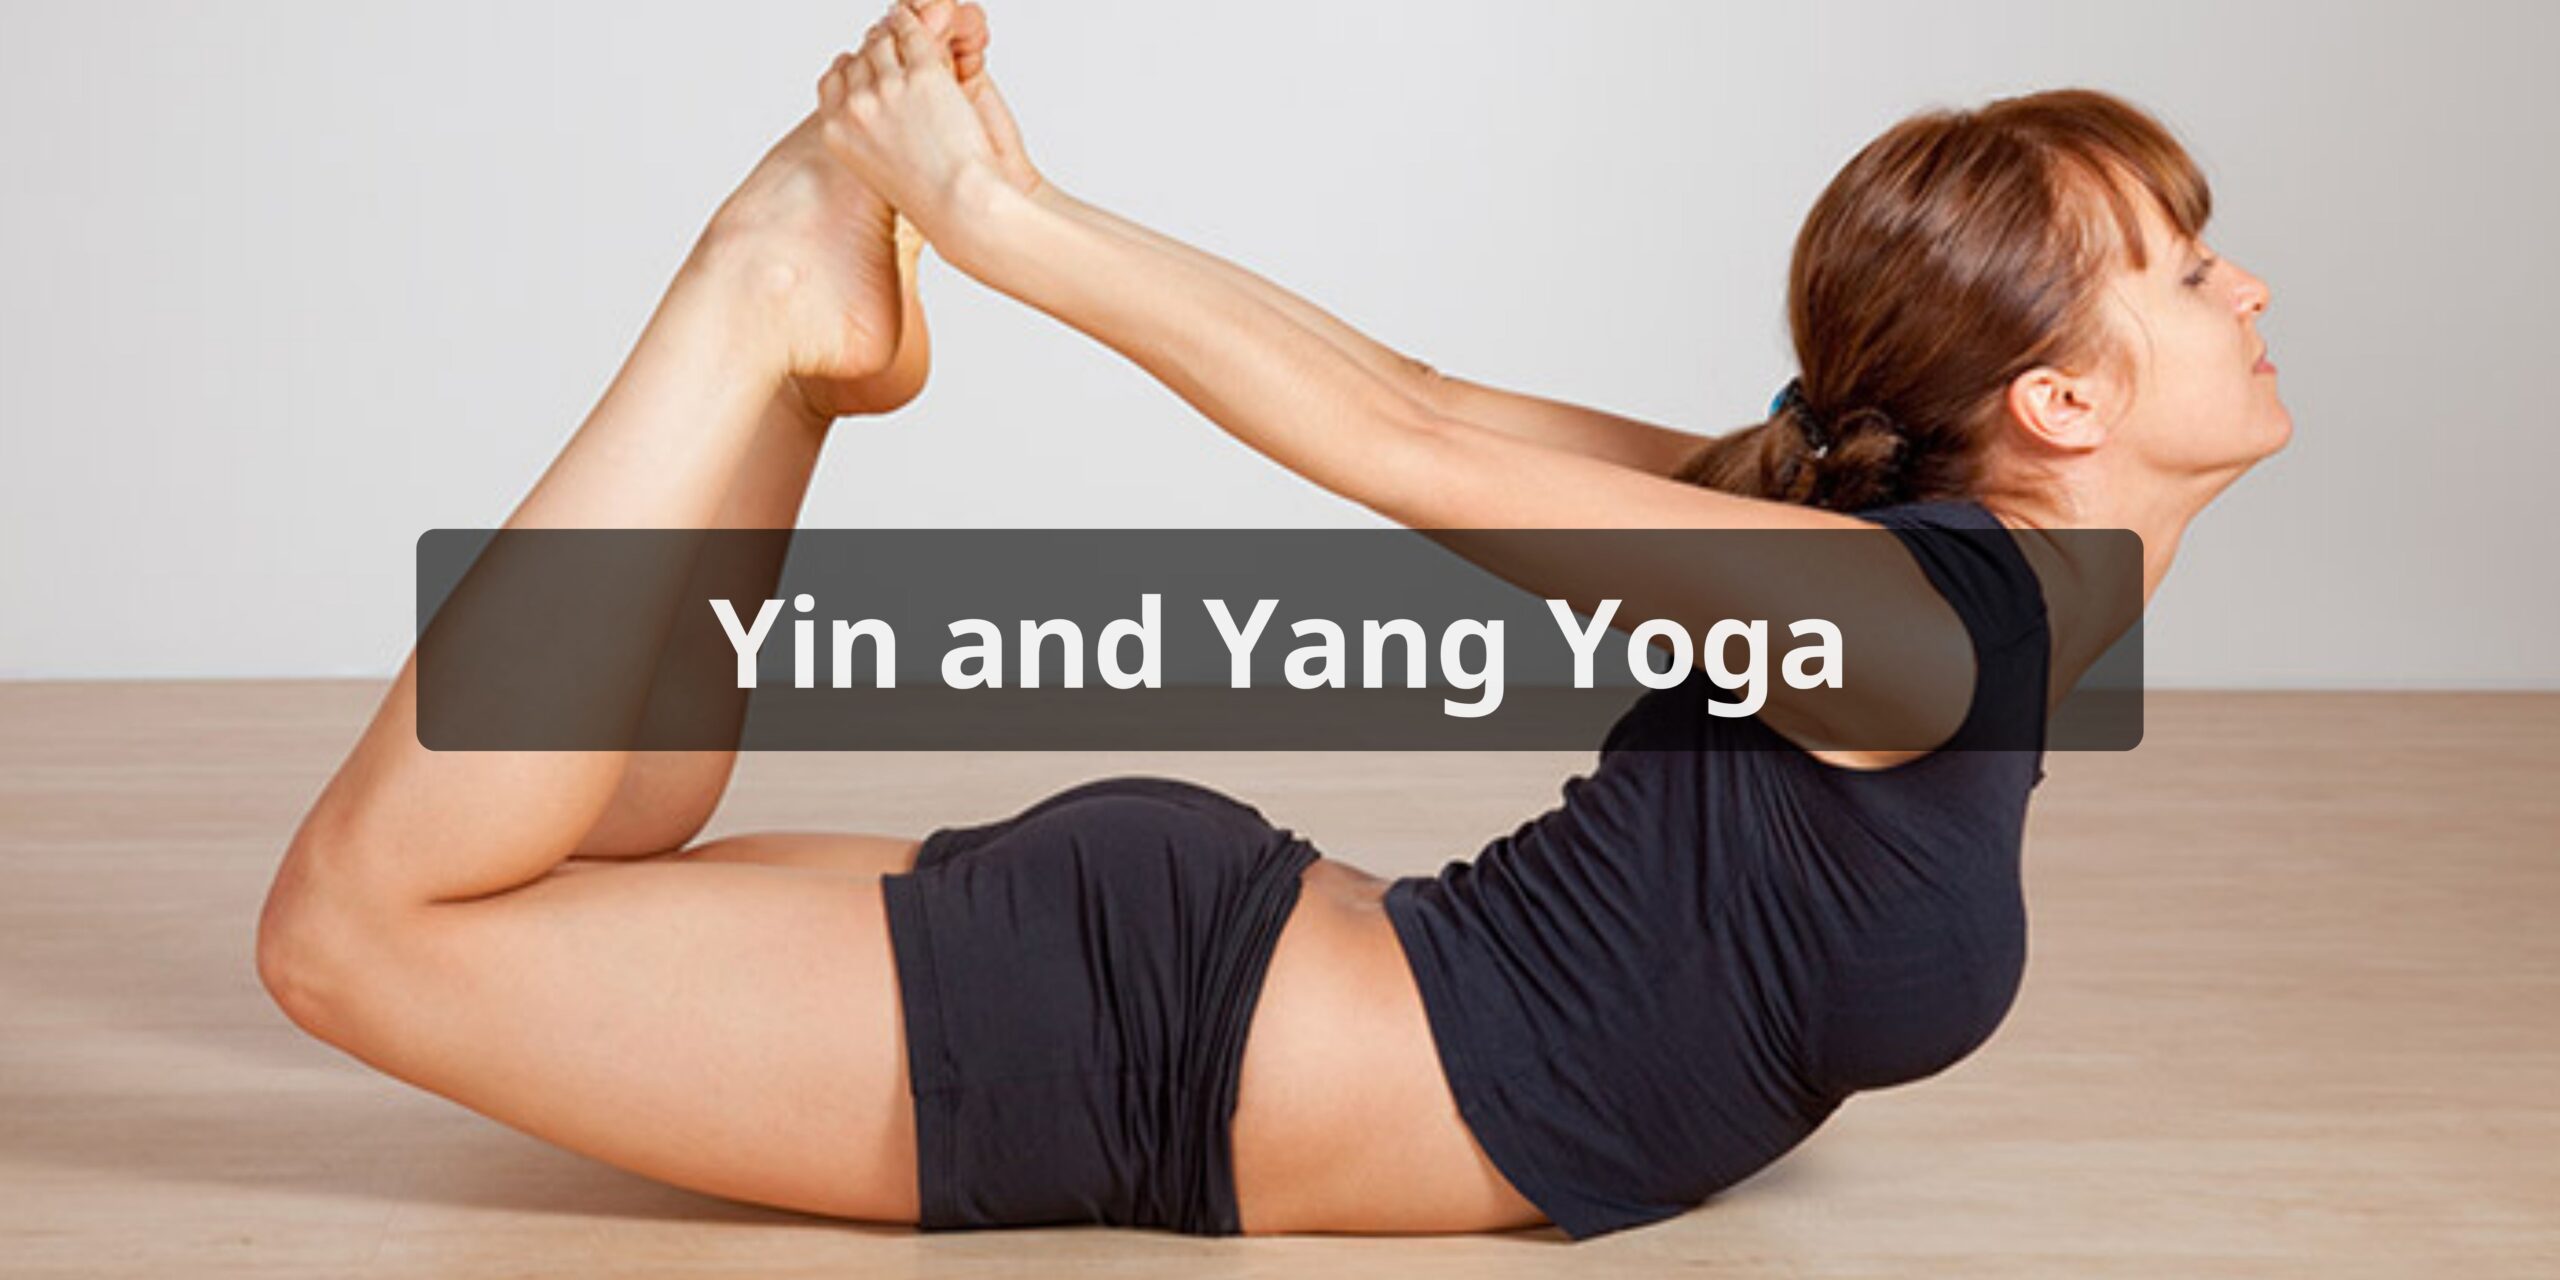 Finding Balance Through Yin and Yang Yoga